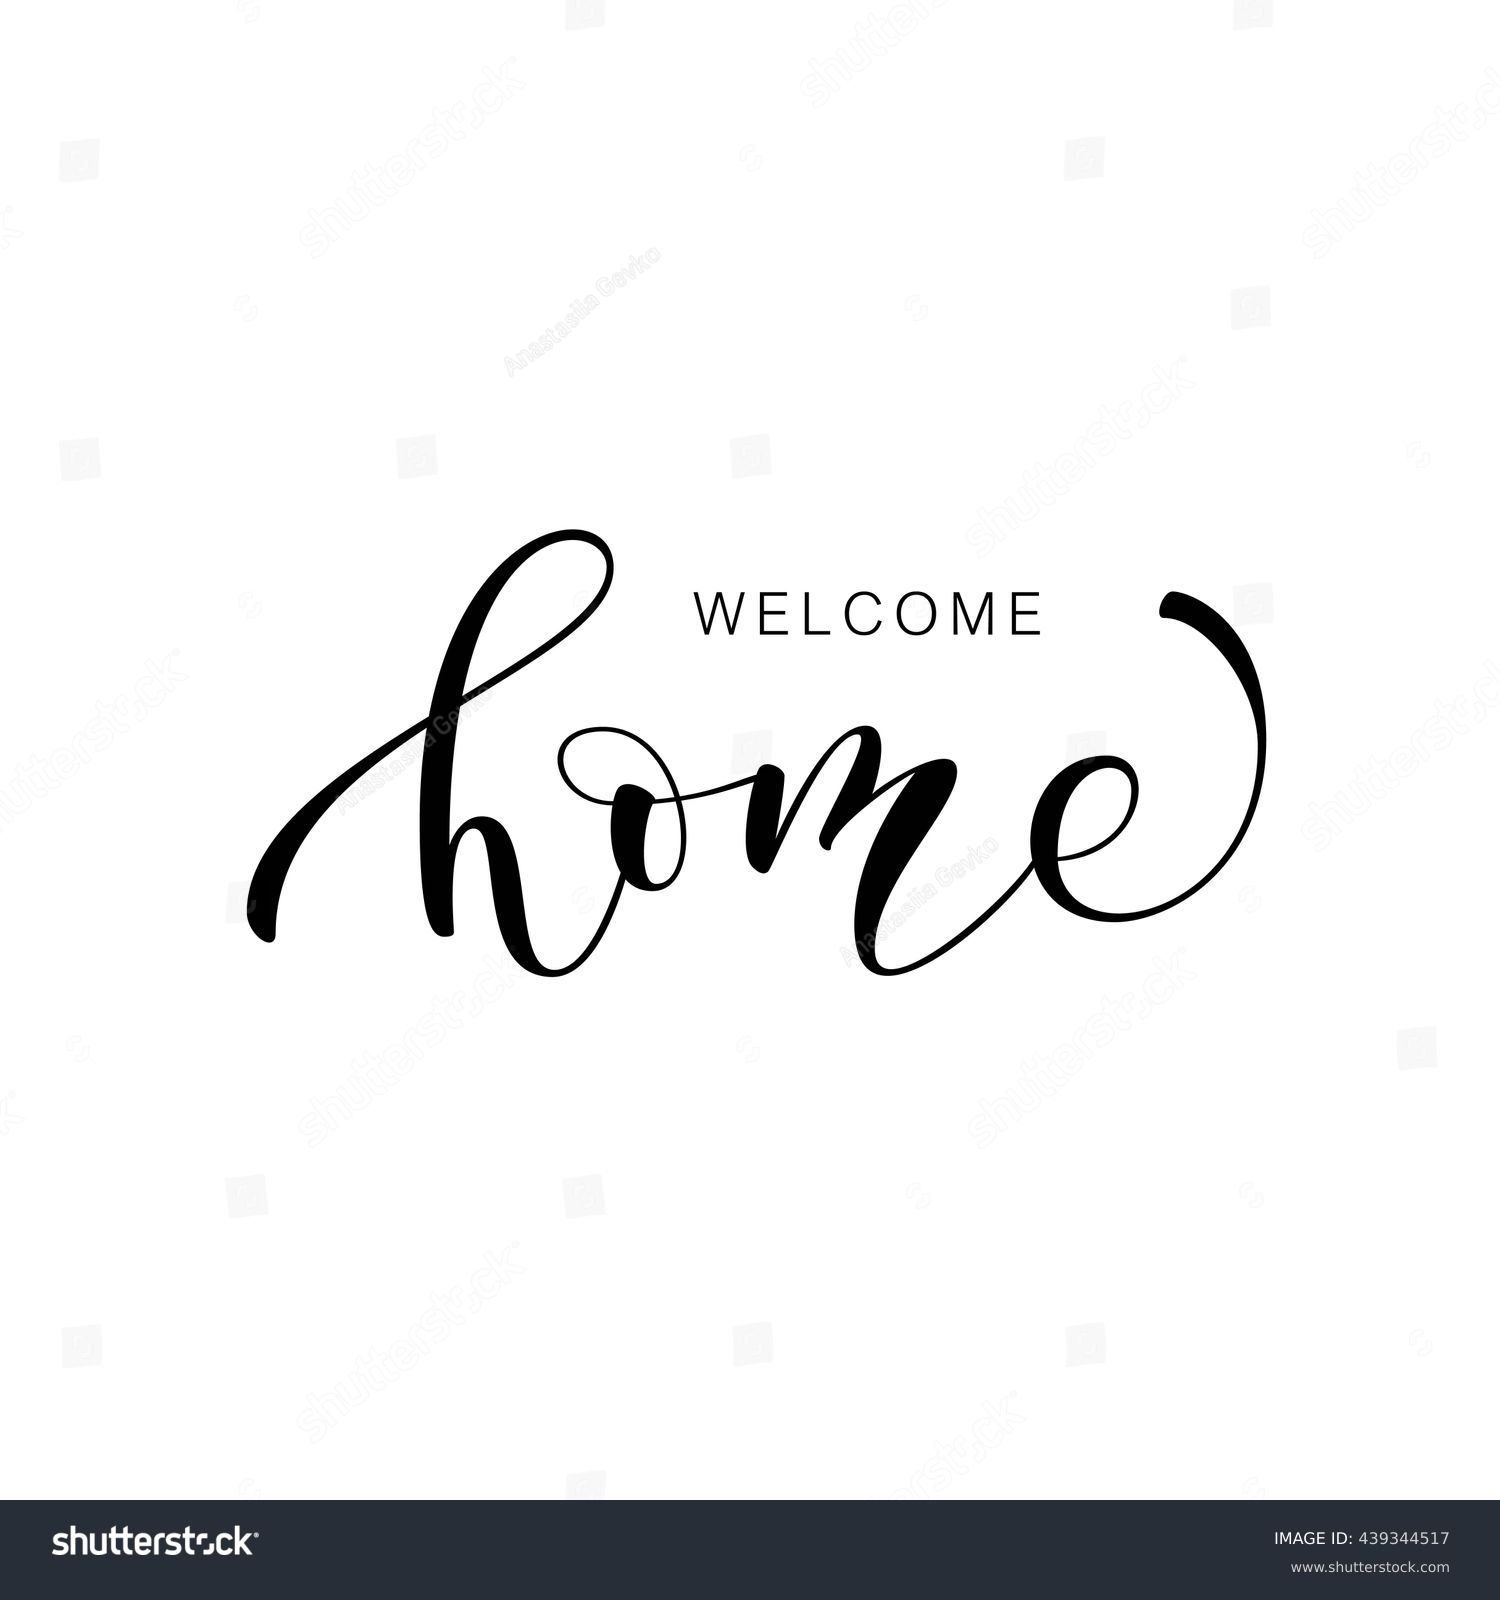 Welcome Home надпись